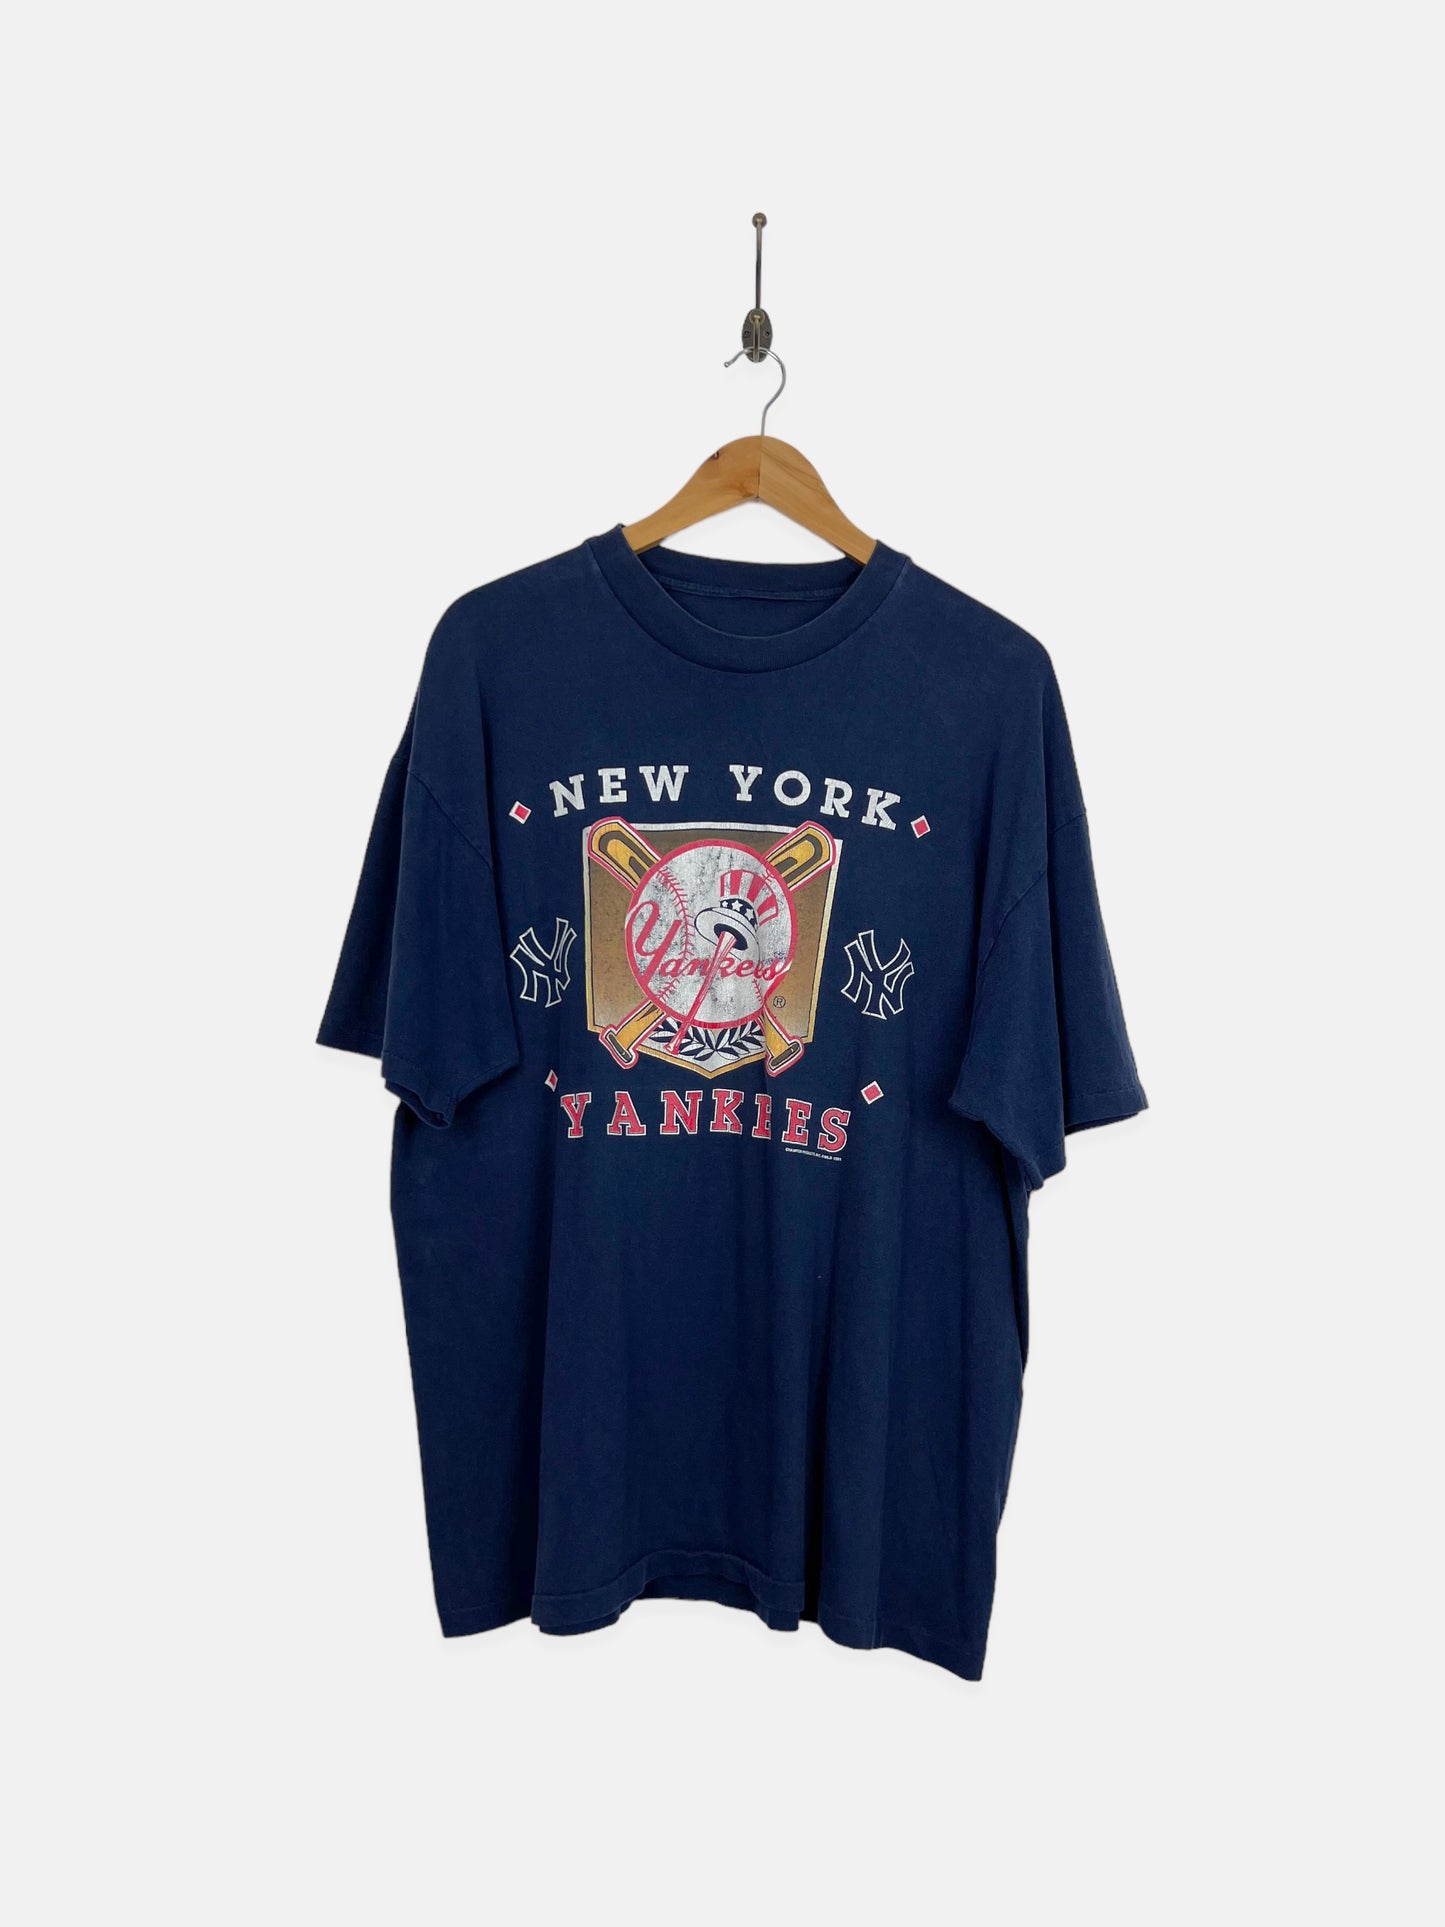 1991 New York Yankees MLB Vintage T-Shirt Size L-XL